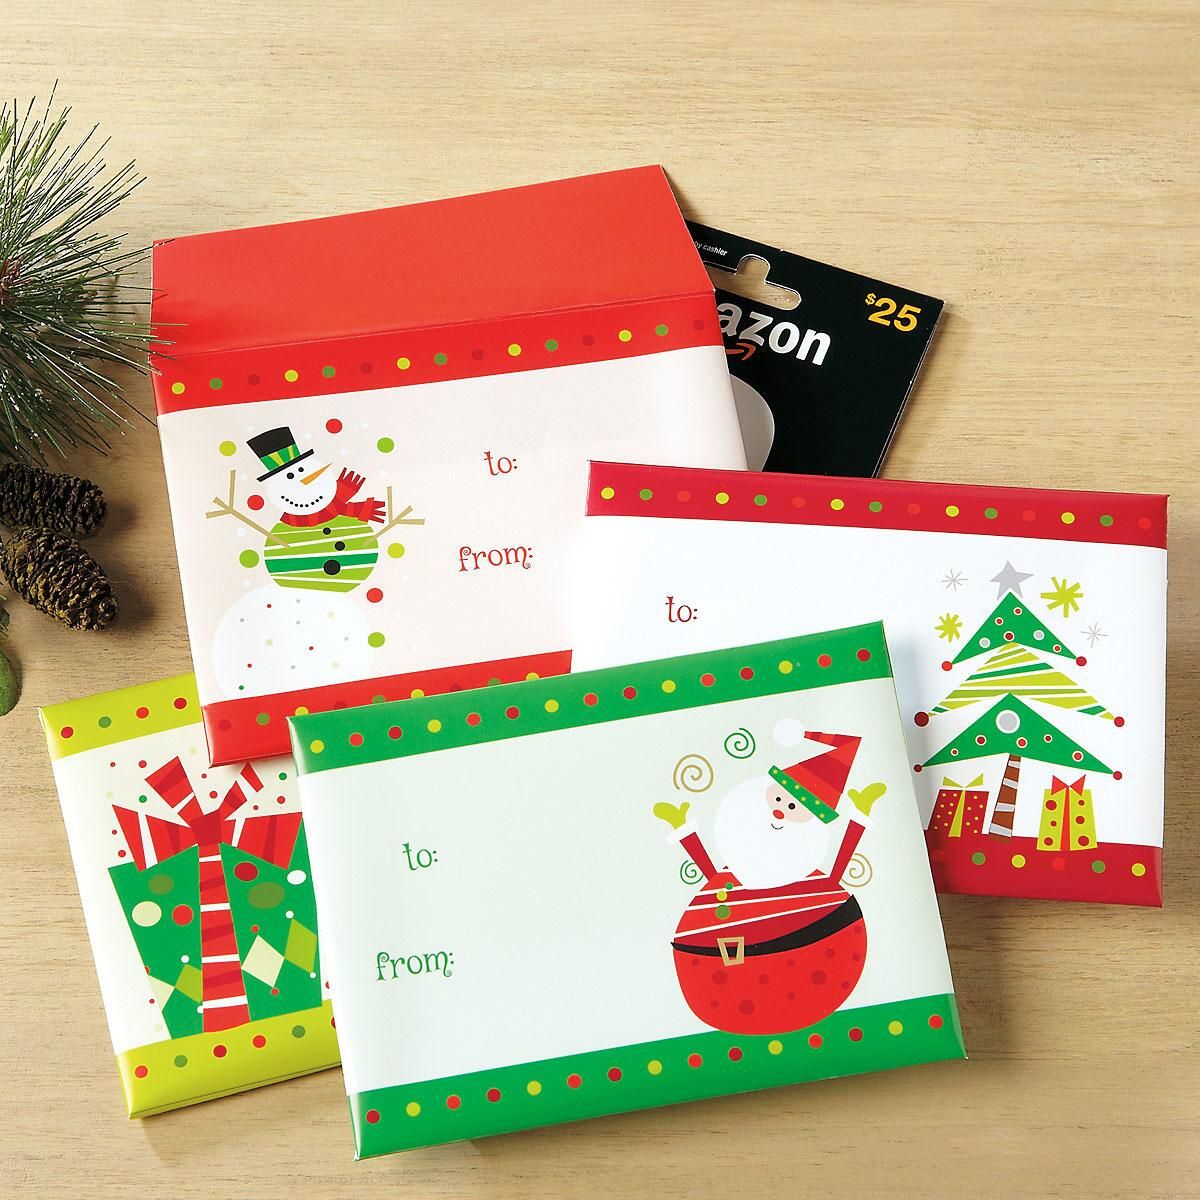 festive-gift-card-envelopes-colorful-images